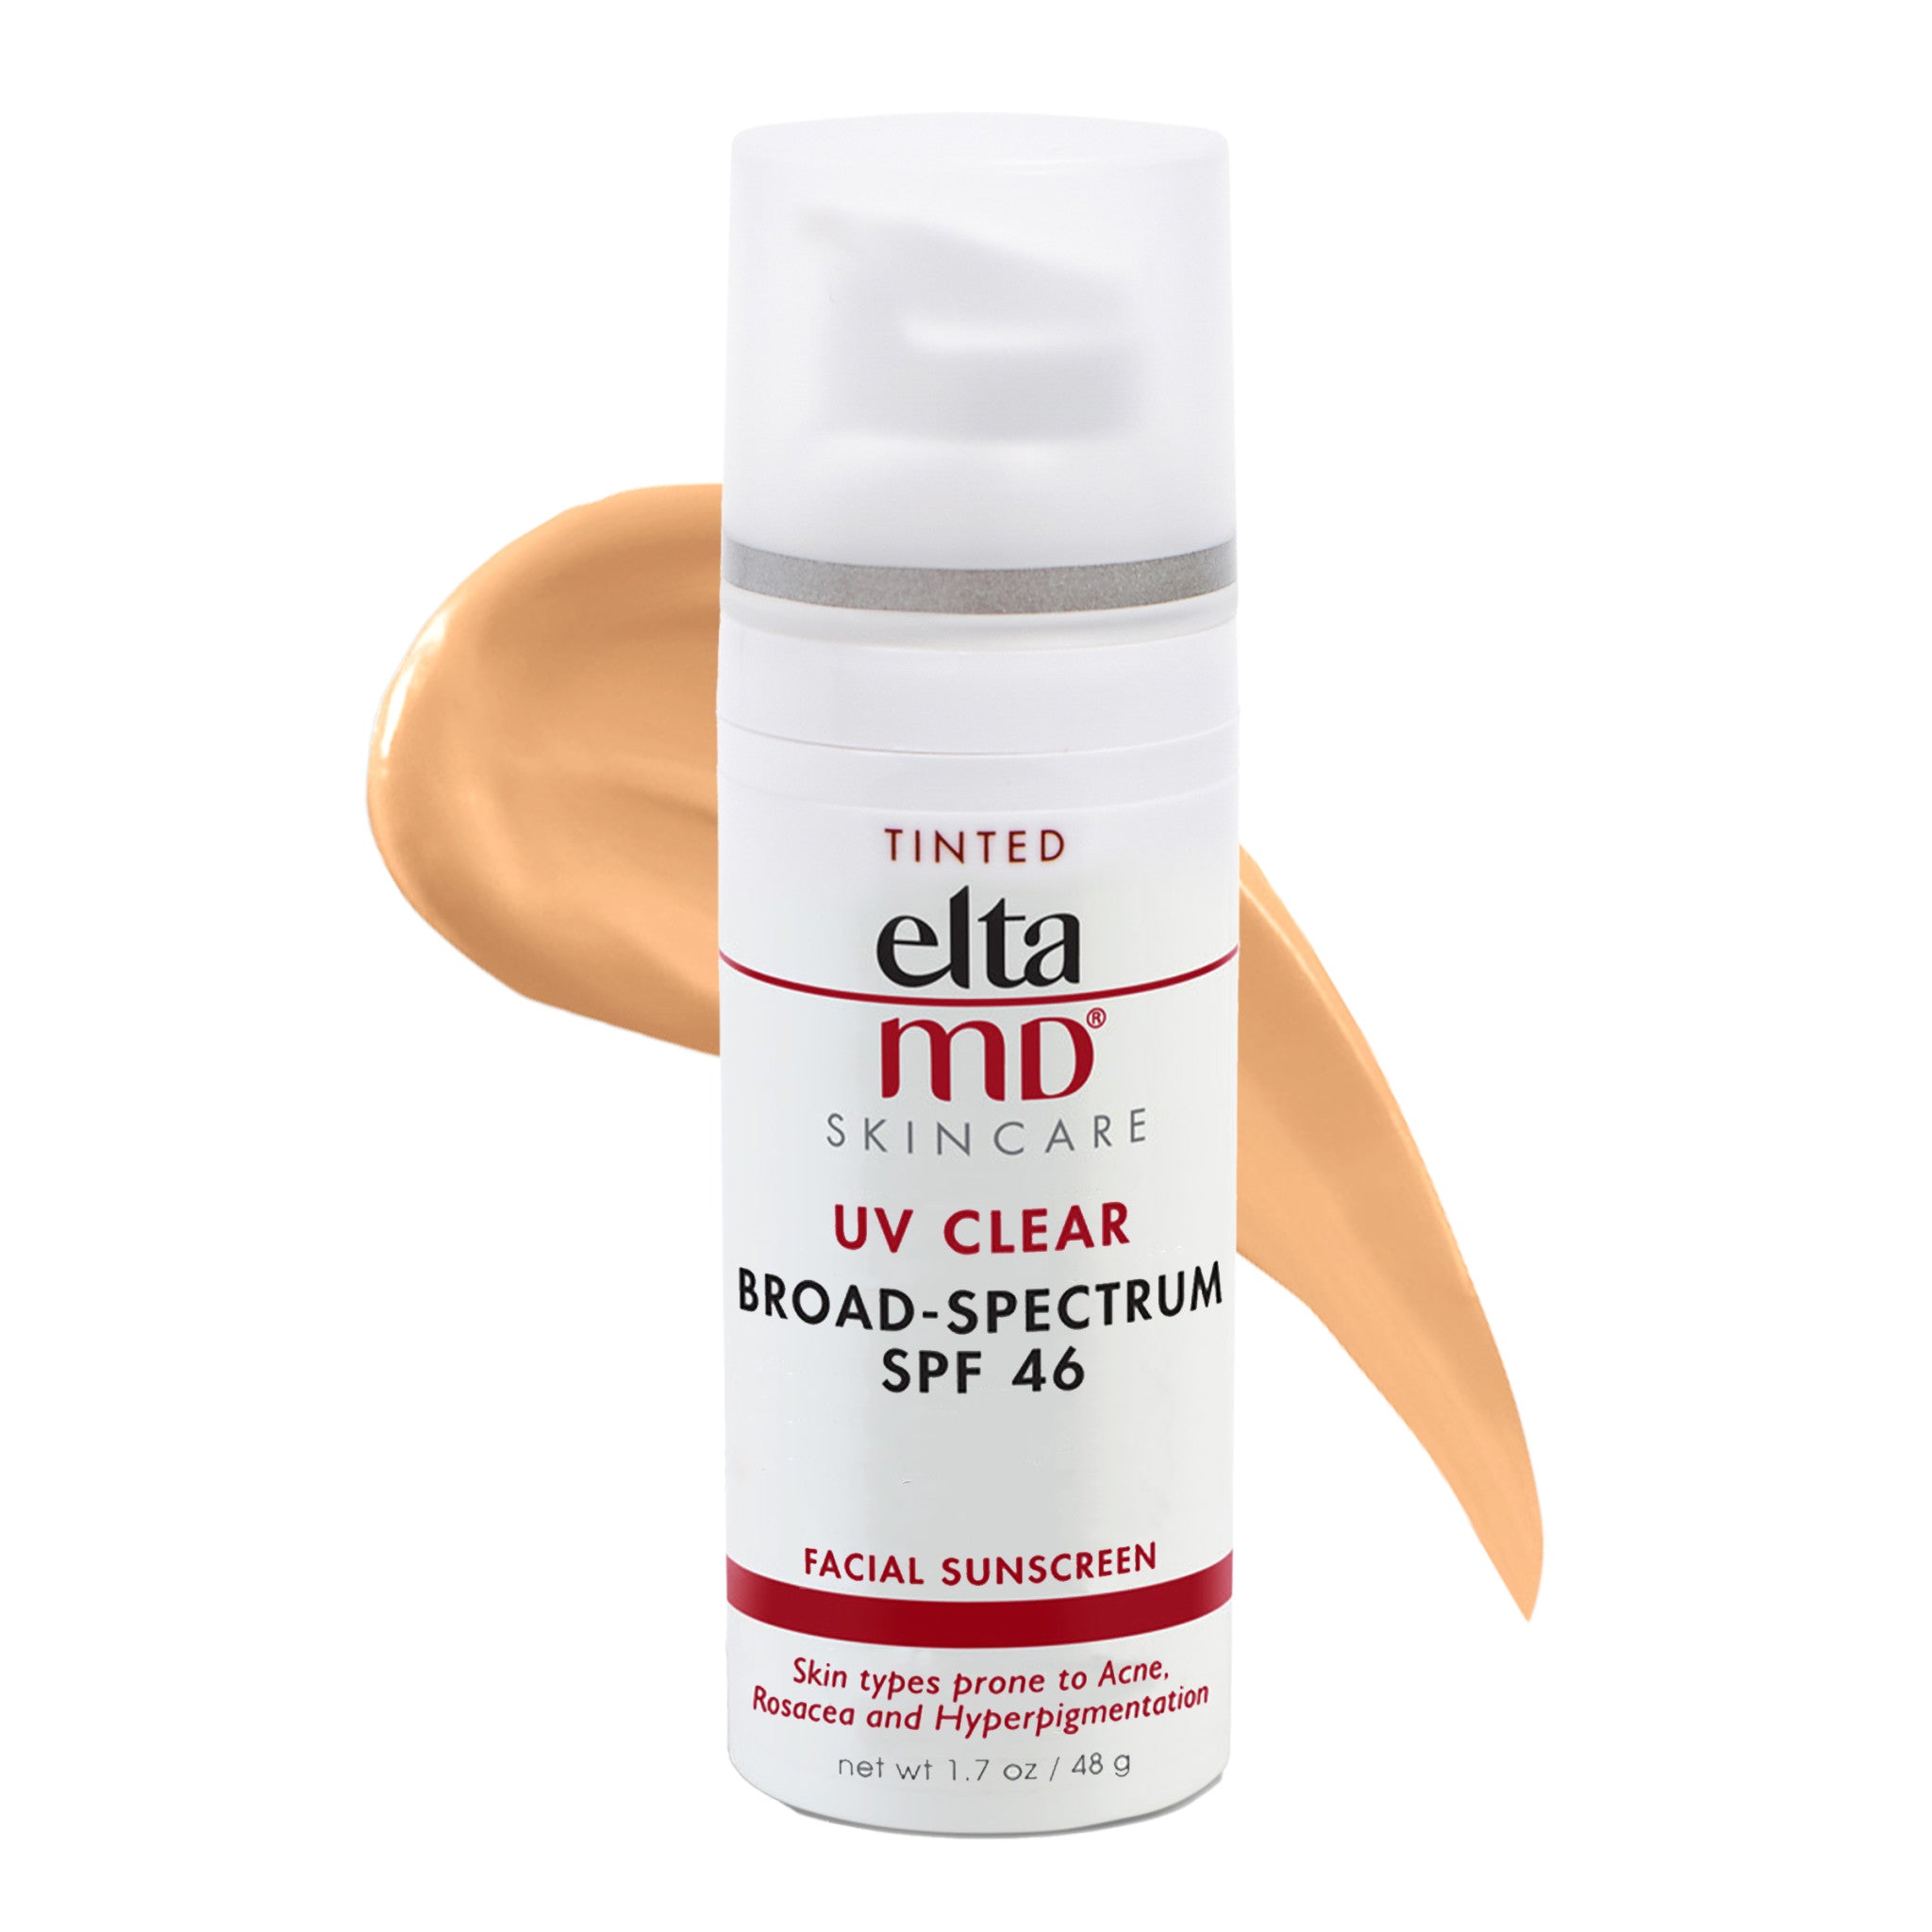 EltaMD UV Clear Tinted Broad-Spectrum Facial Sunscreen SPF 46 main image.